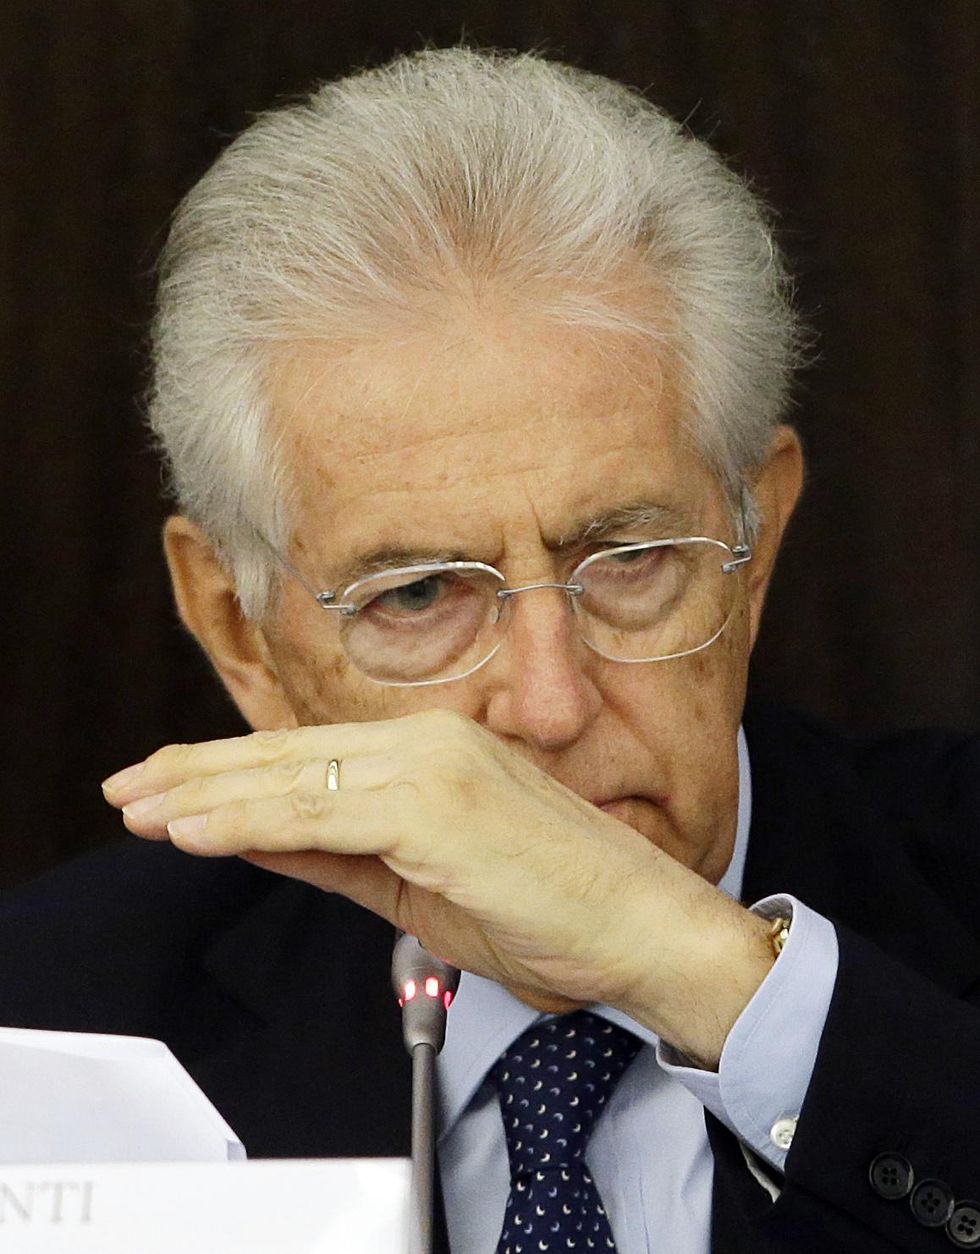 The future of Italian politics after Monti questioned by Professor Alberto Saravalle on WSJ